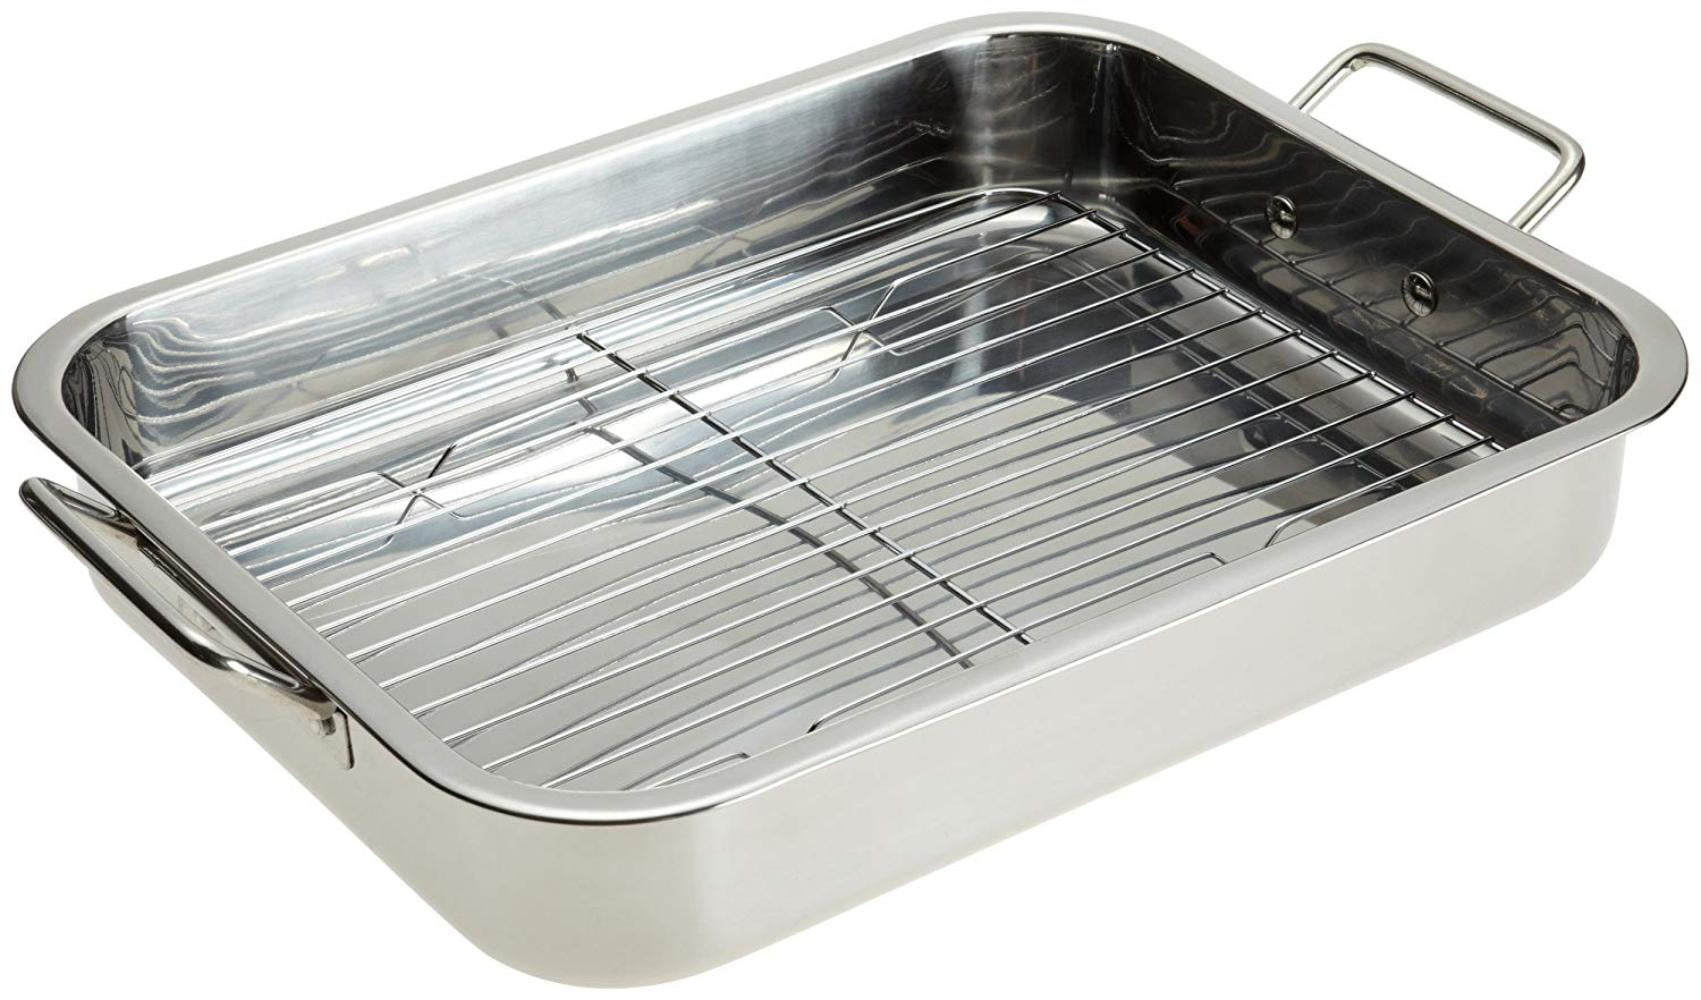 Stainless Steel Roasting/Lasagna Pan, Stainless steel roasting/lasagna pan features removable